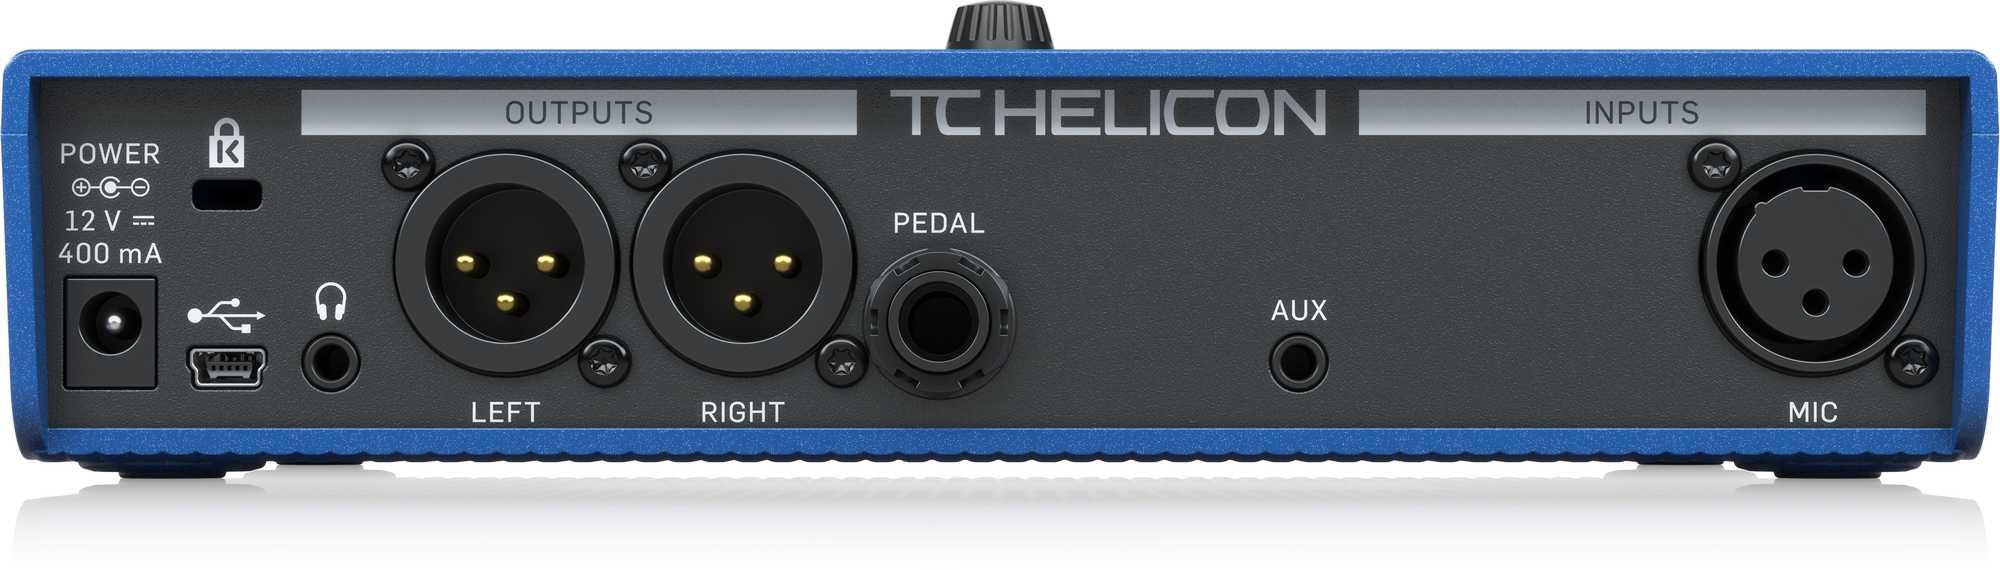 TC-HELICON Voice live play 新品